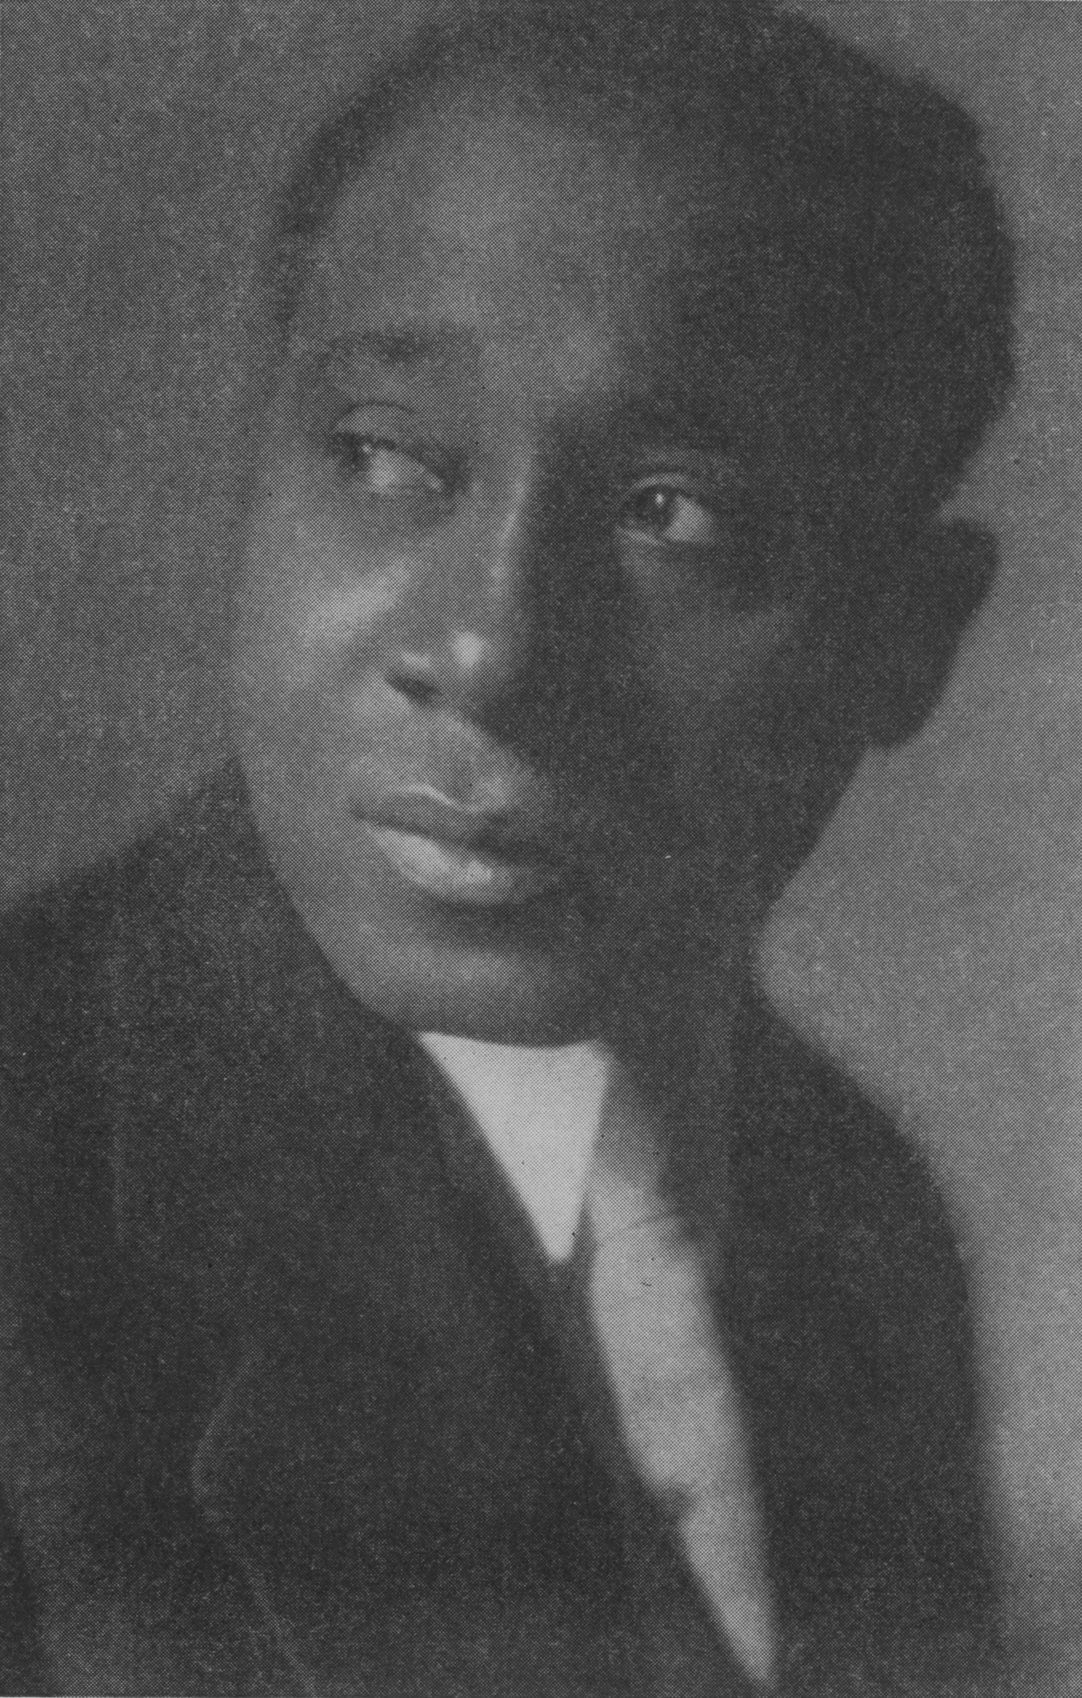 Portrait of R. Nathaniel Dett